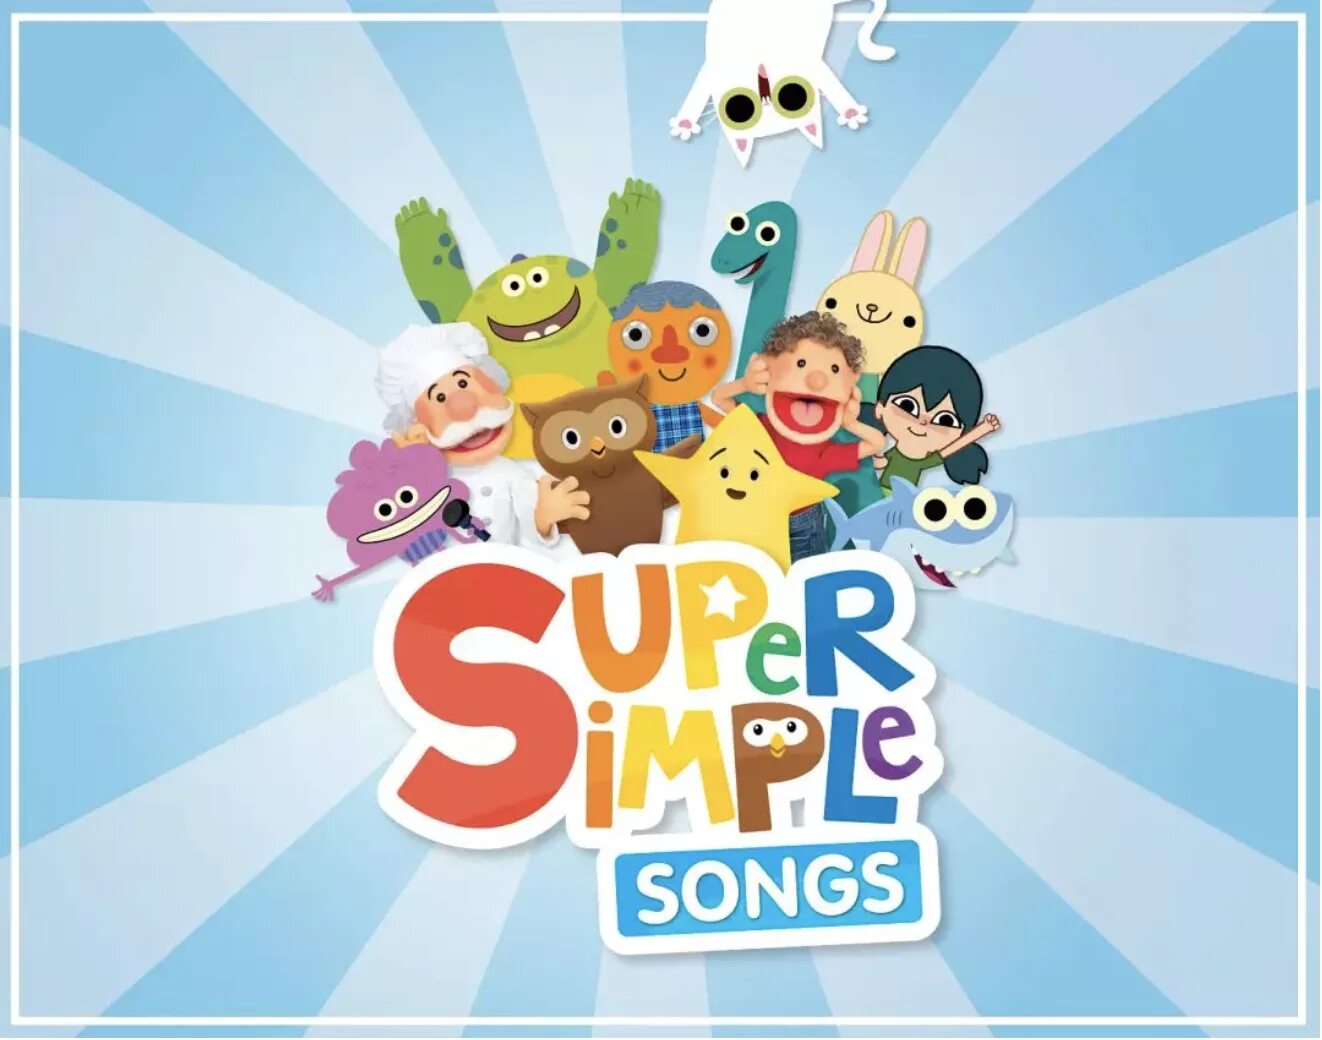 Super simple songs bye. Симпл Сонг. Simple Songs. Super simple. Super simple Songs Kids Songs.